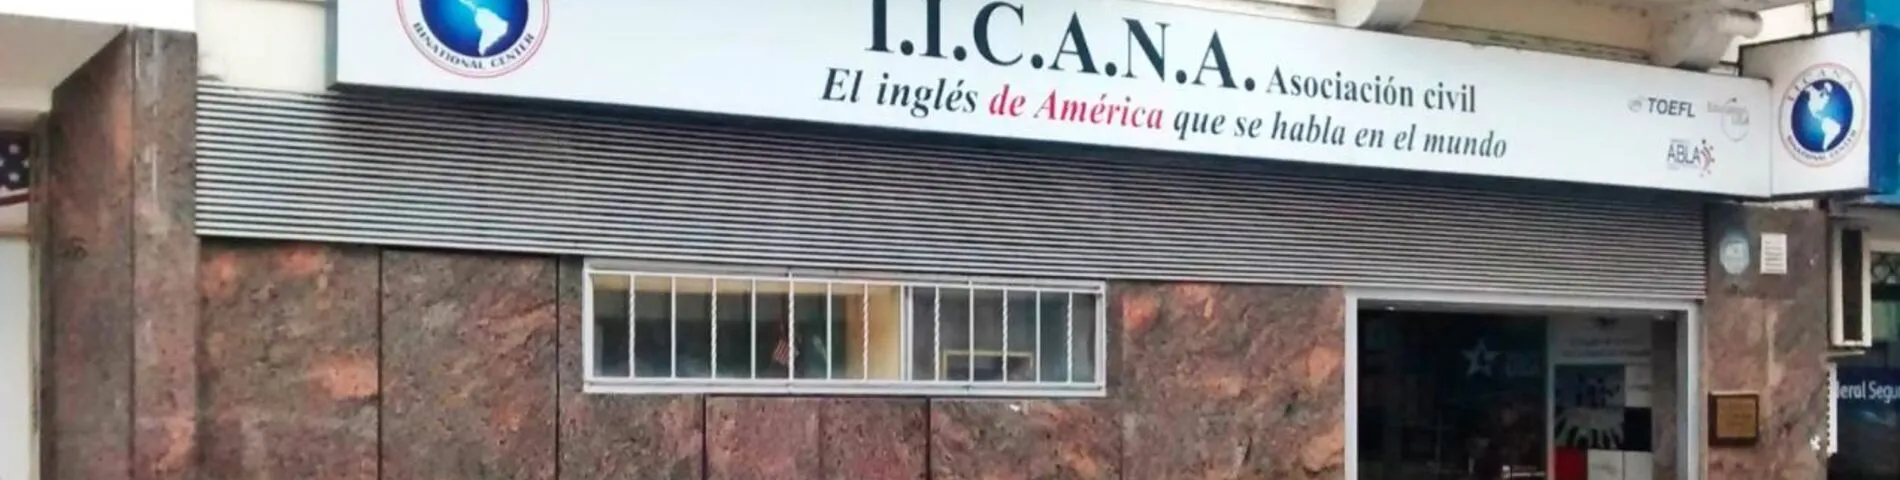 Imatge 1 de l'escola IICANA - Instituto de Intercambio Cultural Argentino Norteamericano